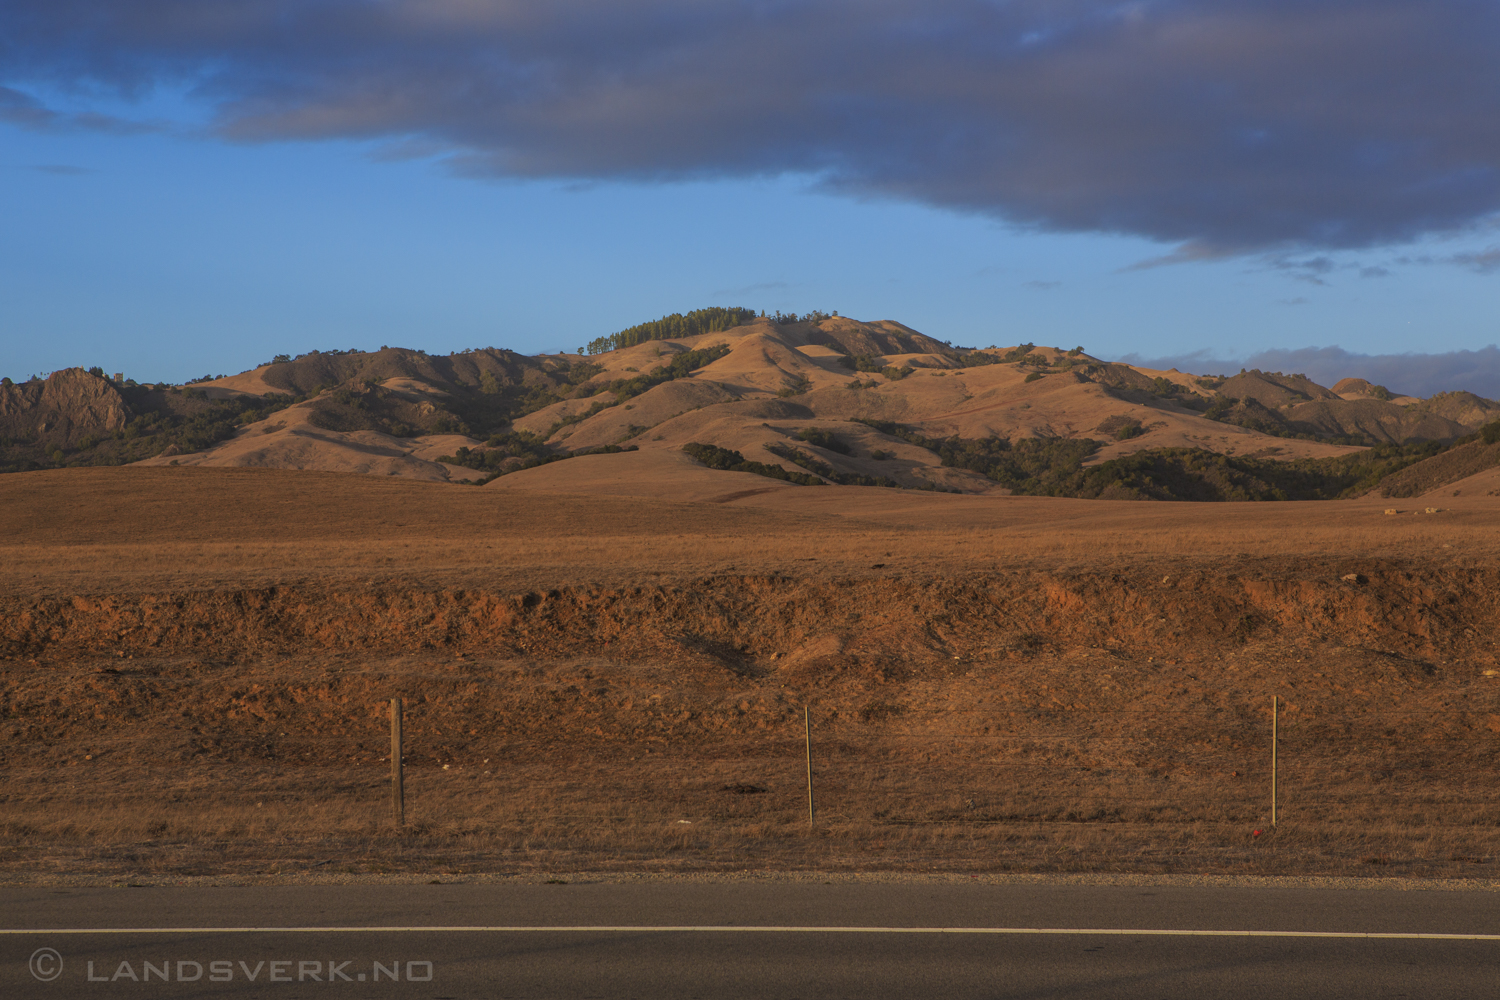 Somewhere along Highway 1, California. 

(Canon EOS 5D Mark III / Canon EF 24-70mm f/2.8 L USM)